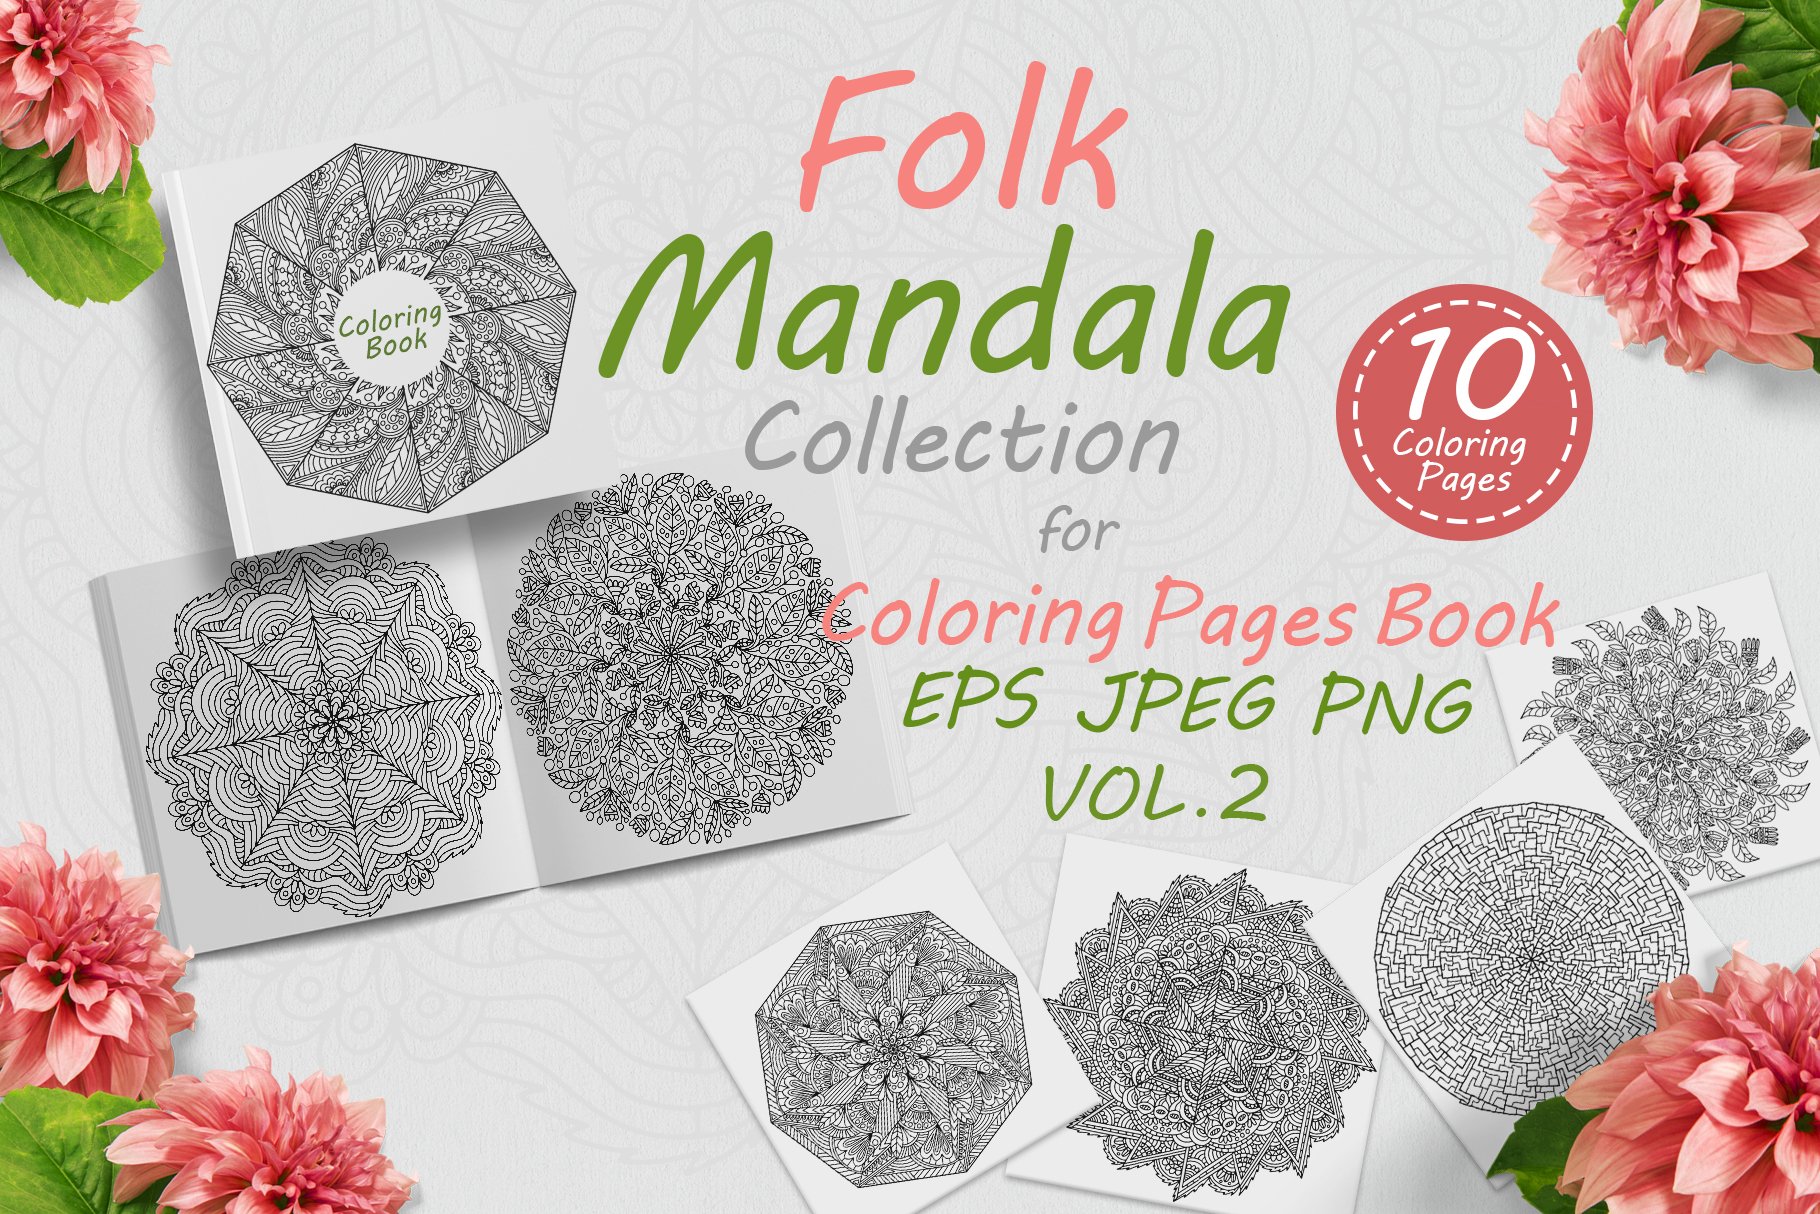 Mandalas with folk ornaments Vol-02cover image.